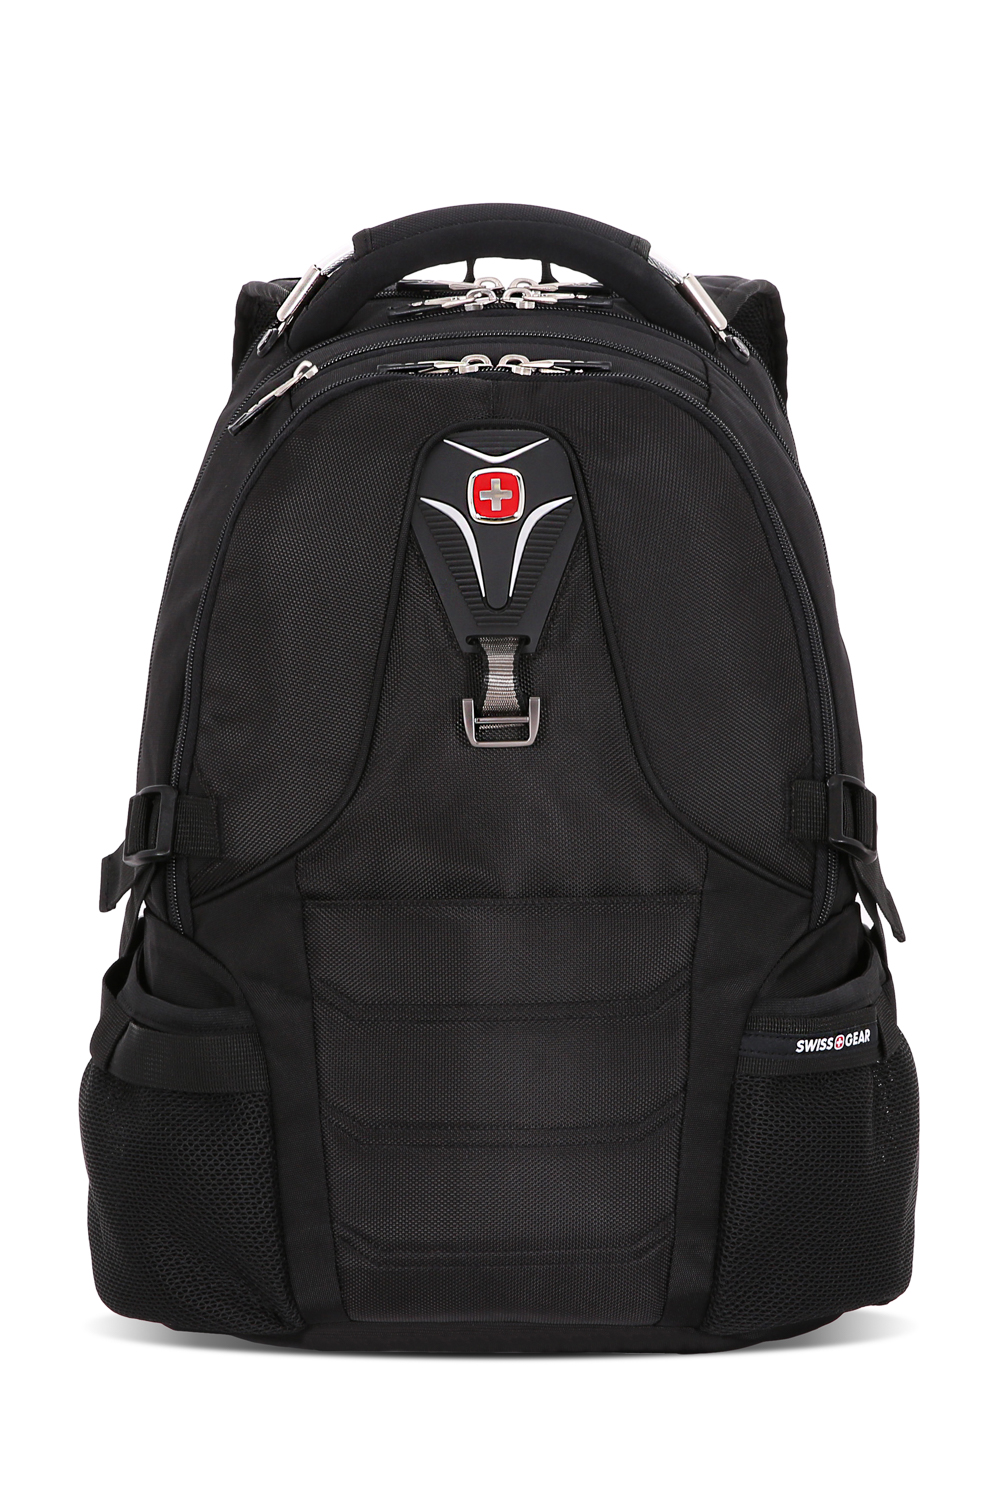 Swissgear 2673 Packable Tote Bag - Black